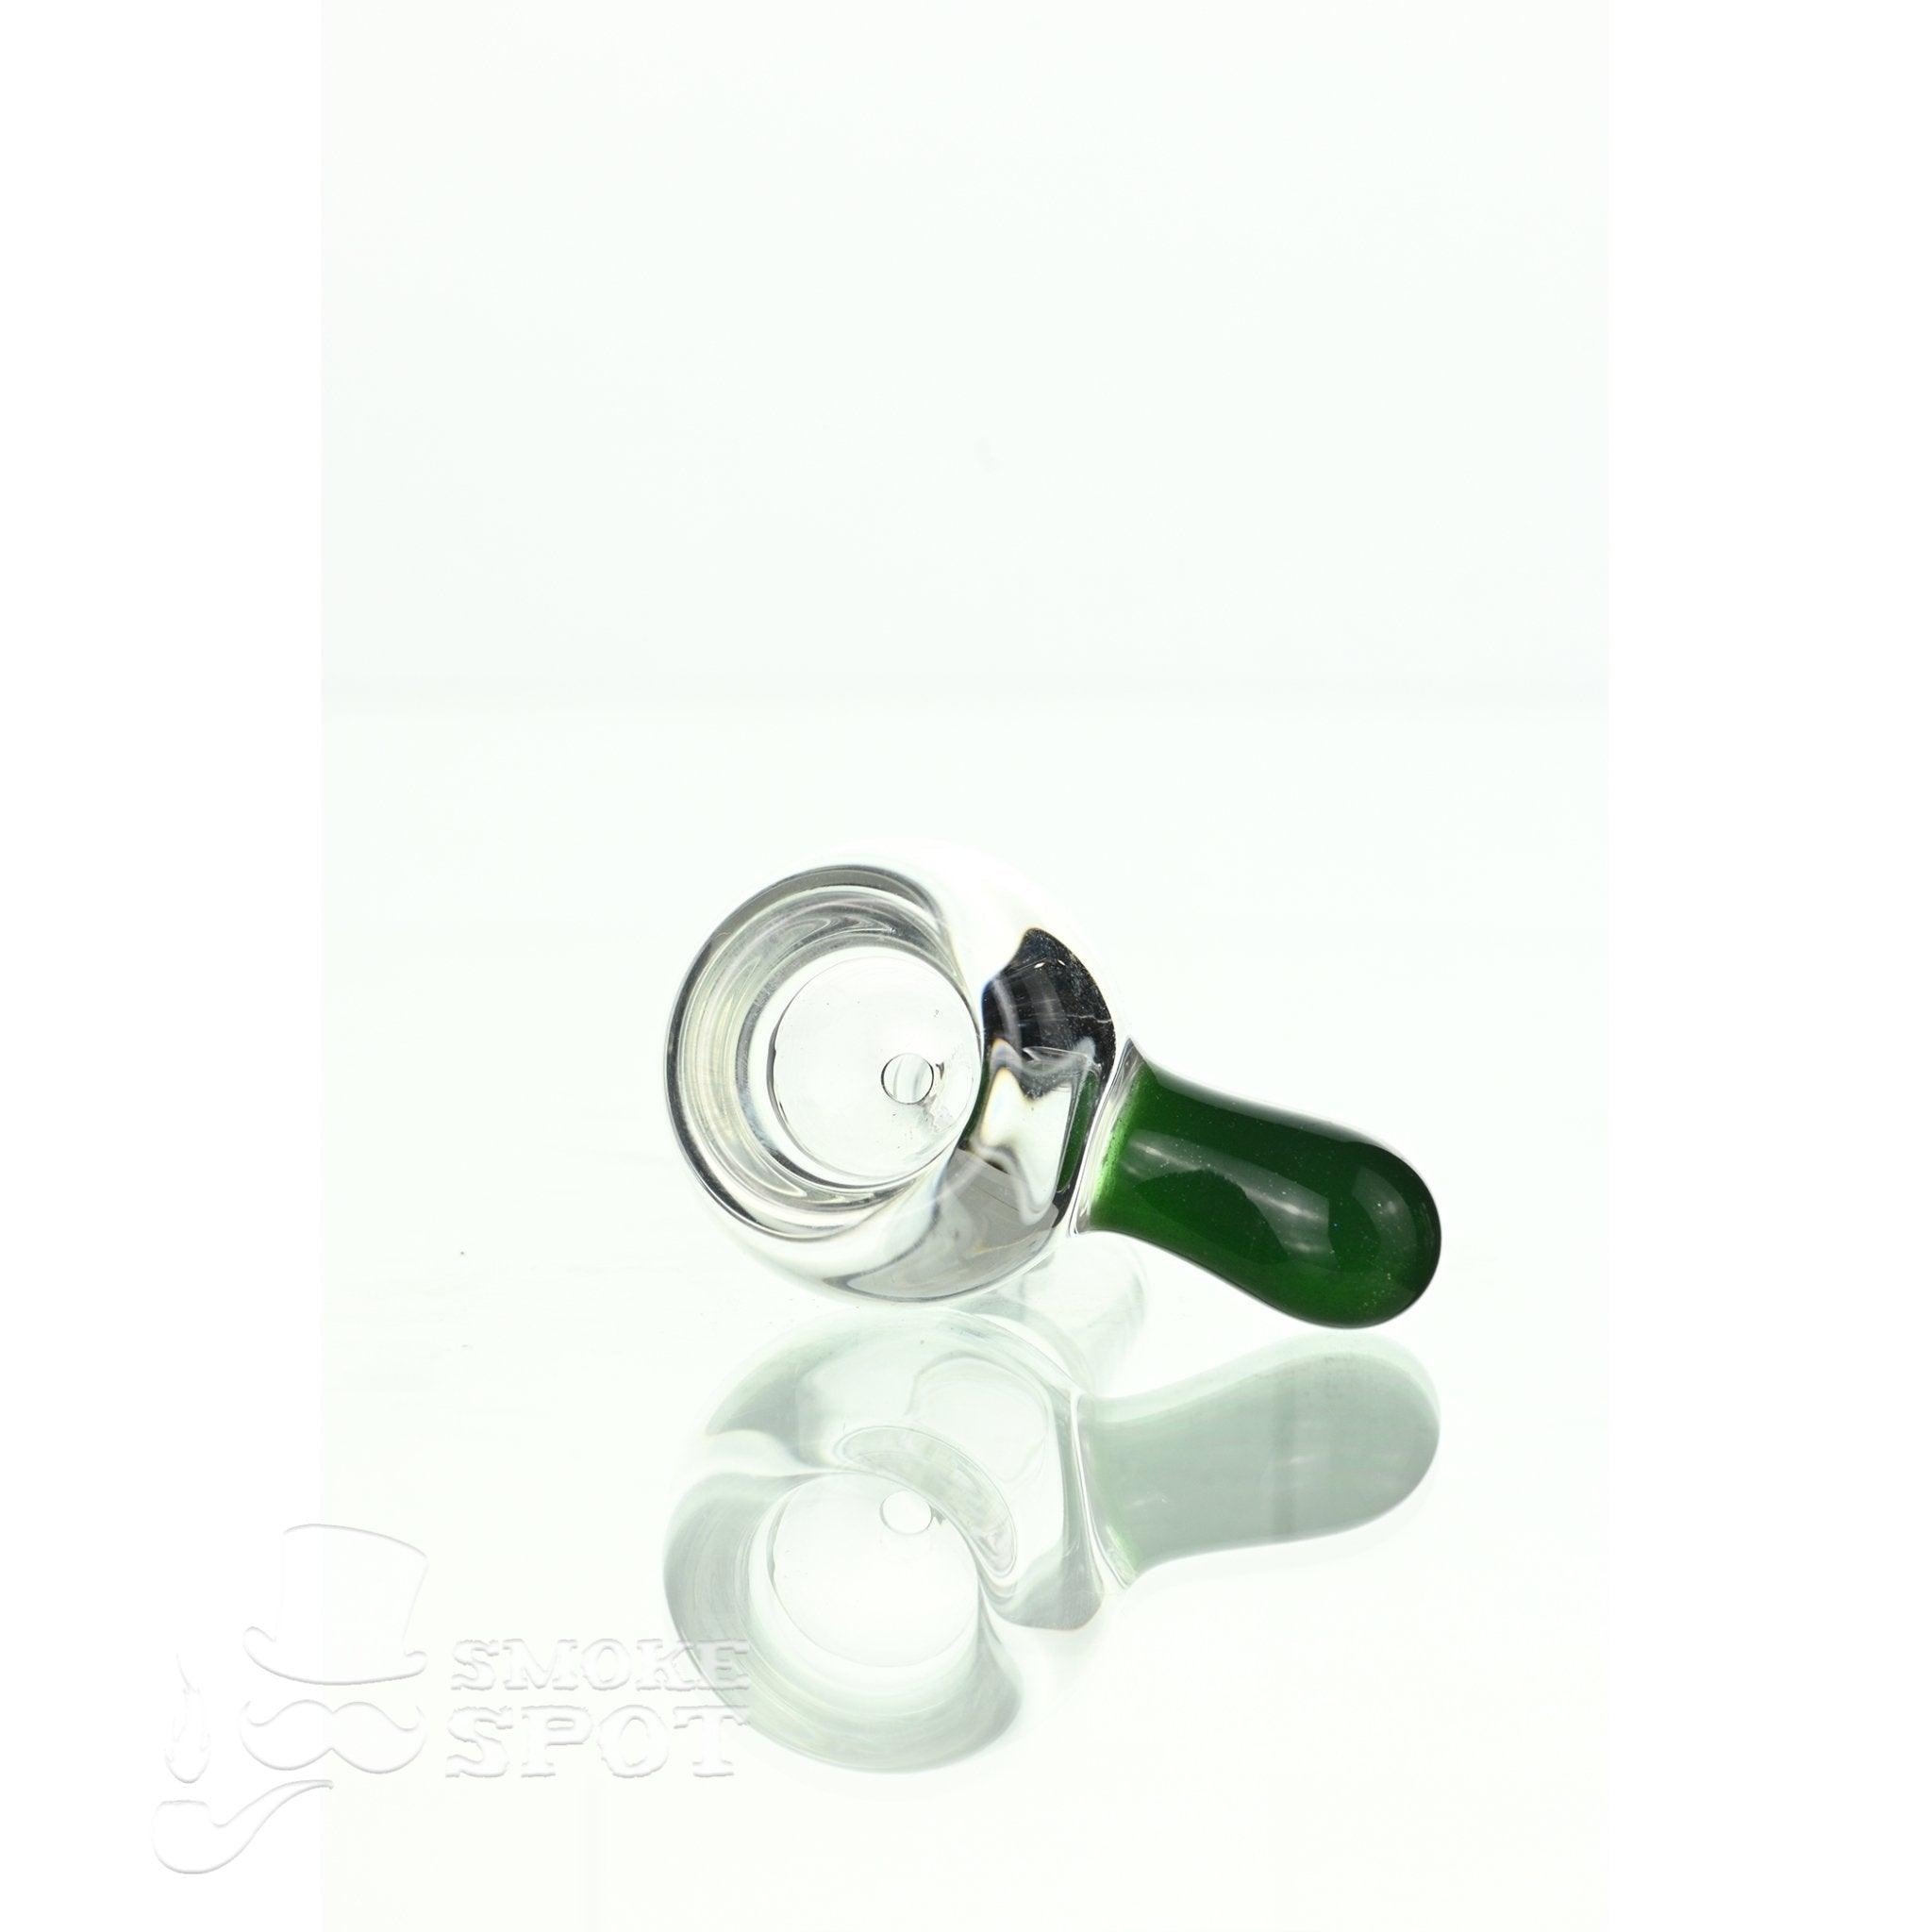 Joe Madigan dry herb slide 14 mm green handle - Smoke Spot Smoke Shop